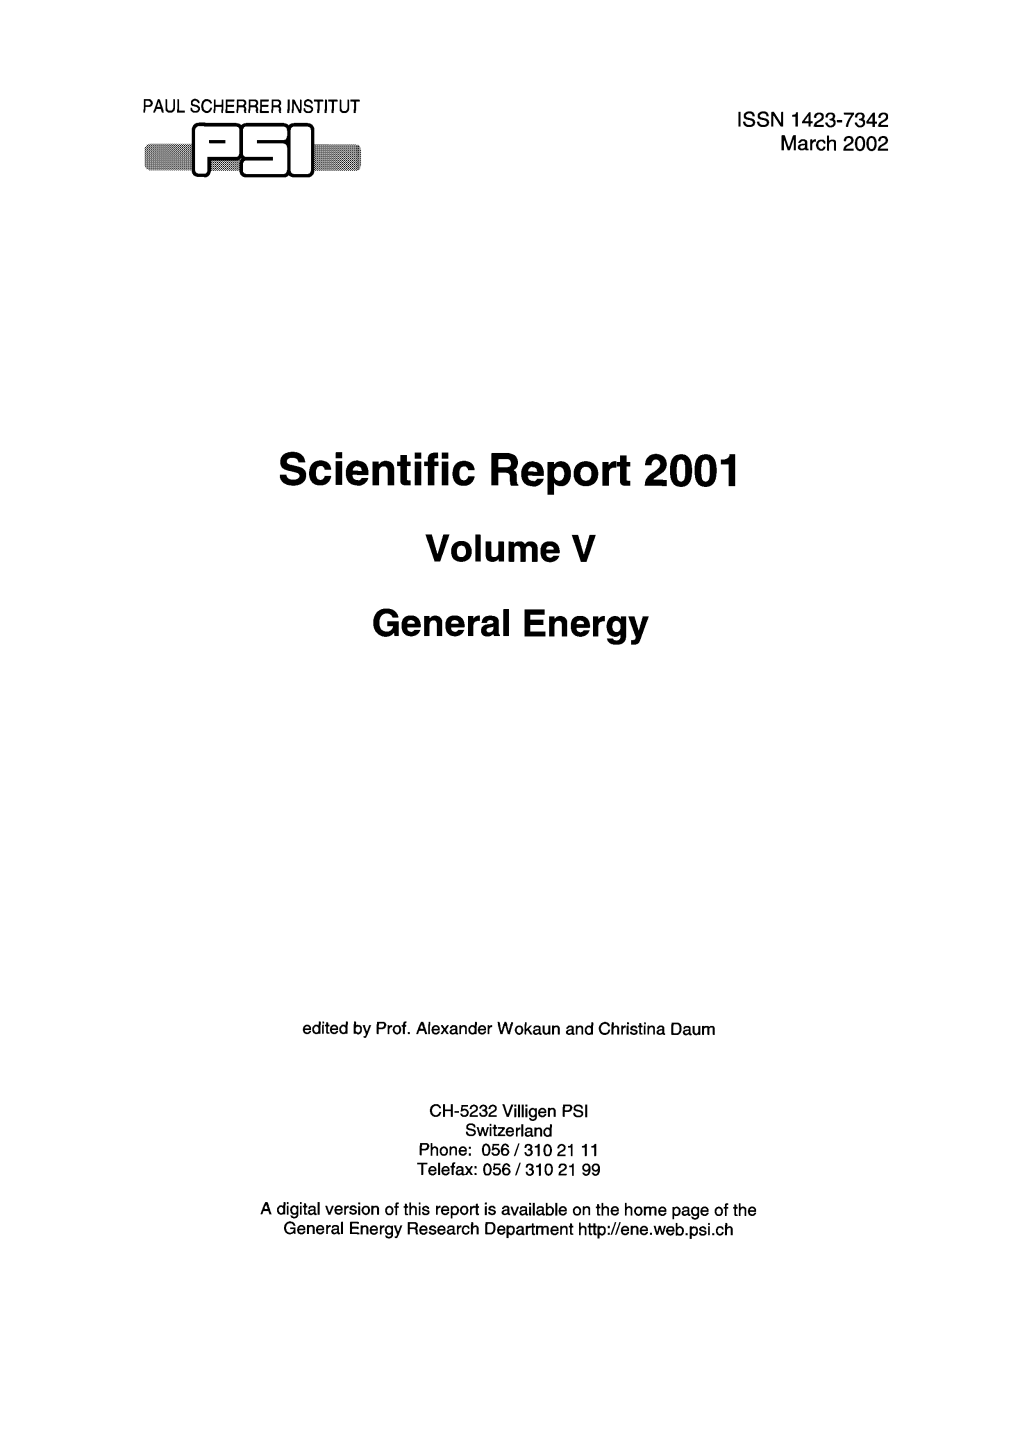 Scientific Report 2001 Volume V General Energy